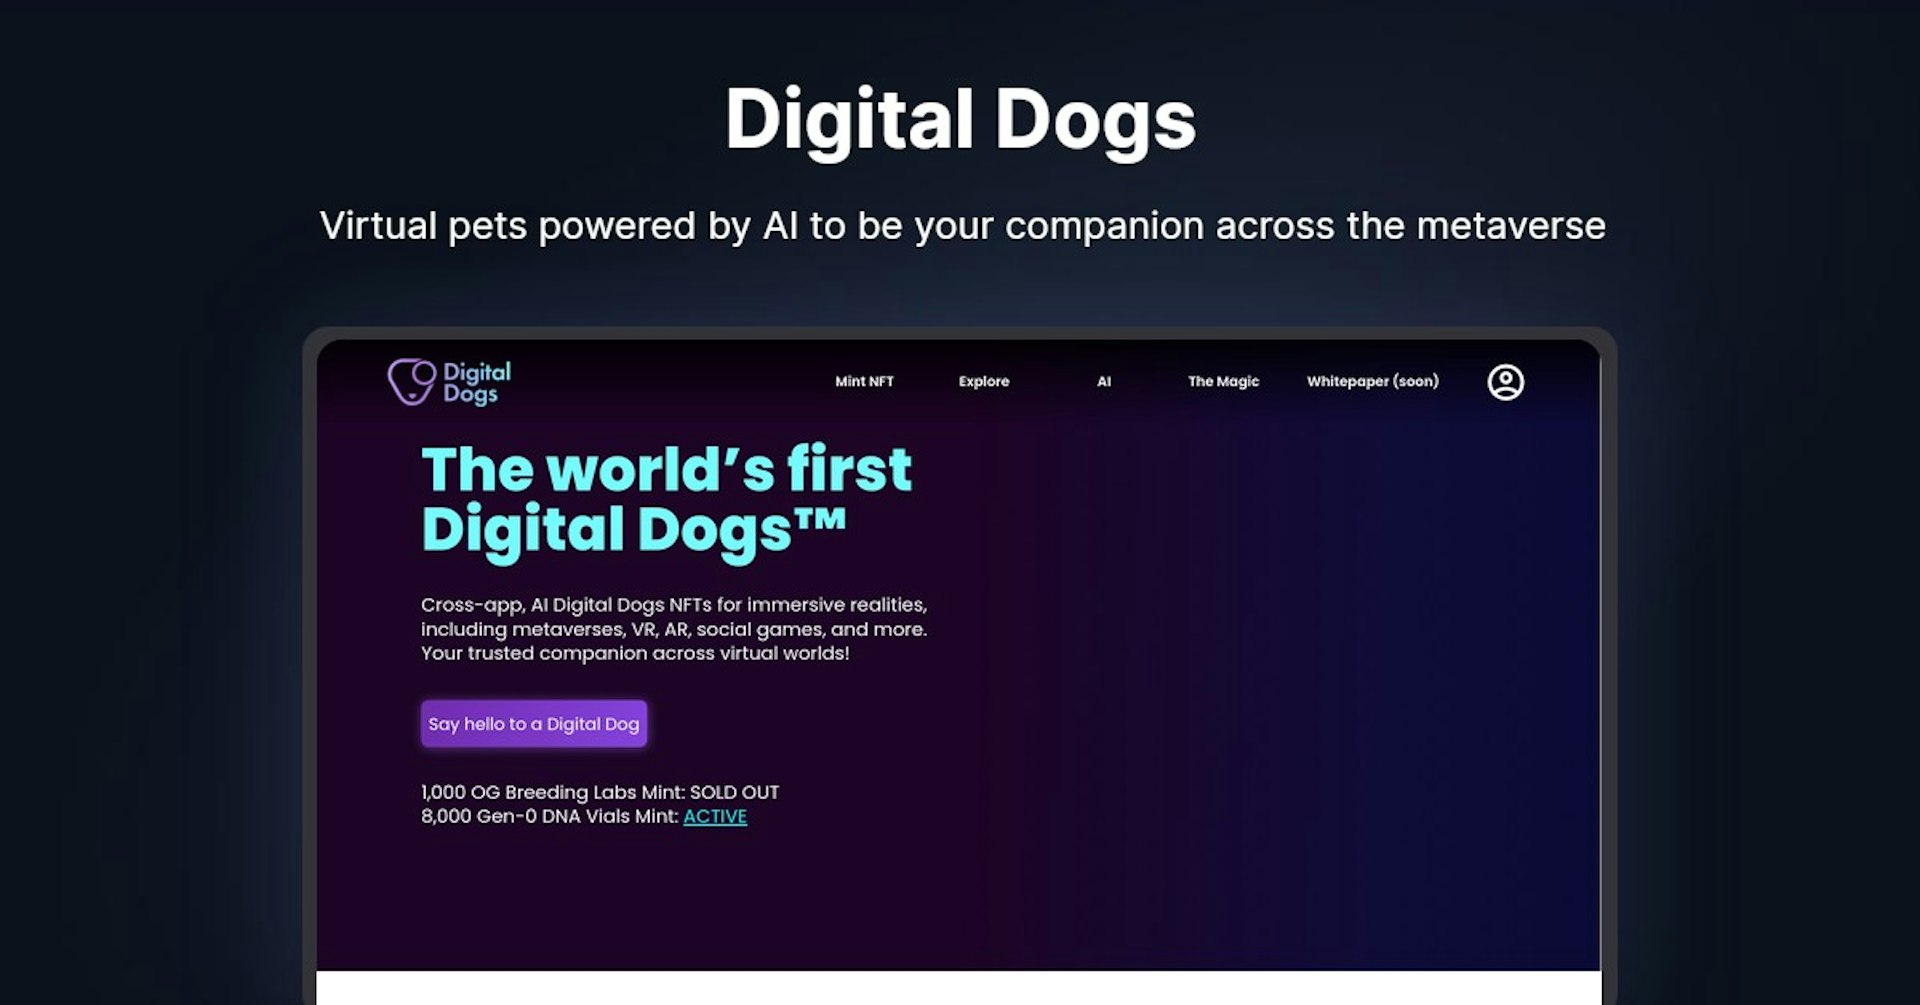 Digital Dogs